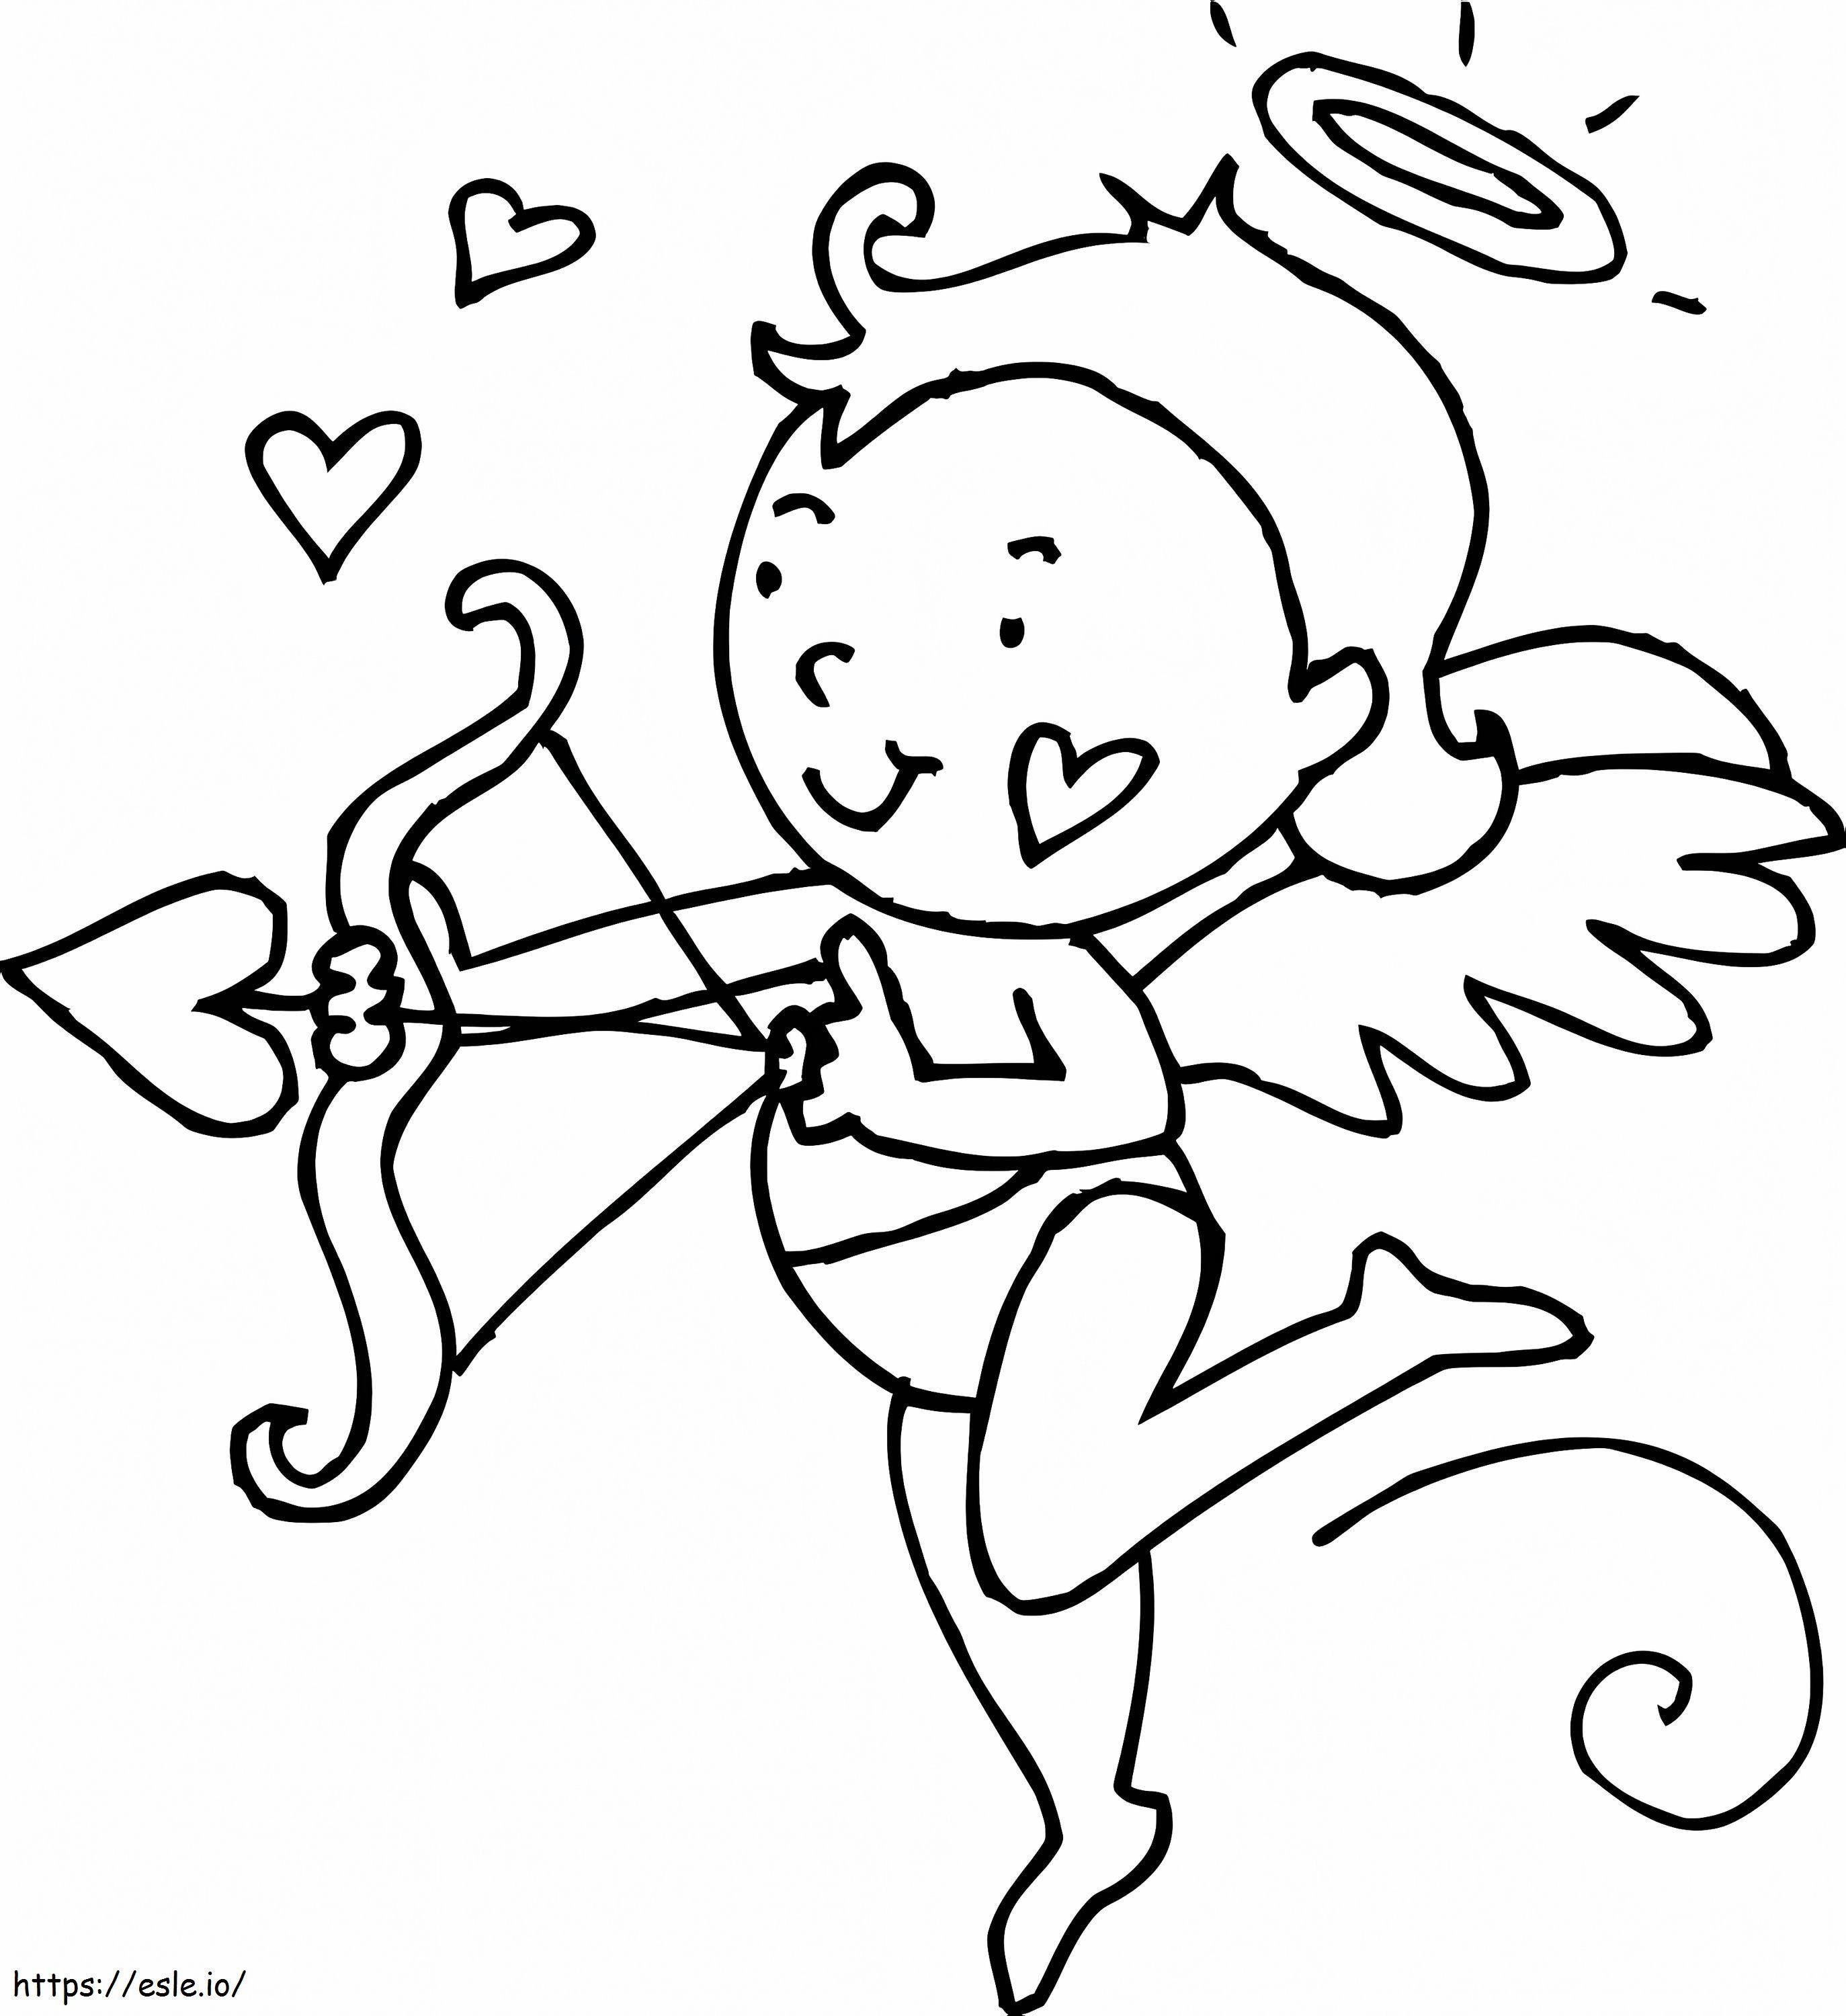 Desenho de Cupido para colorir